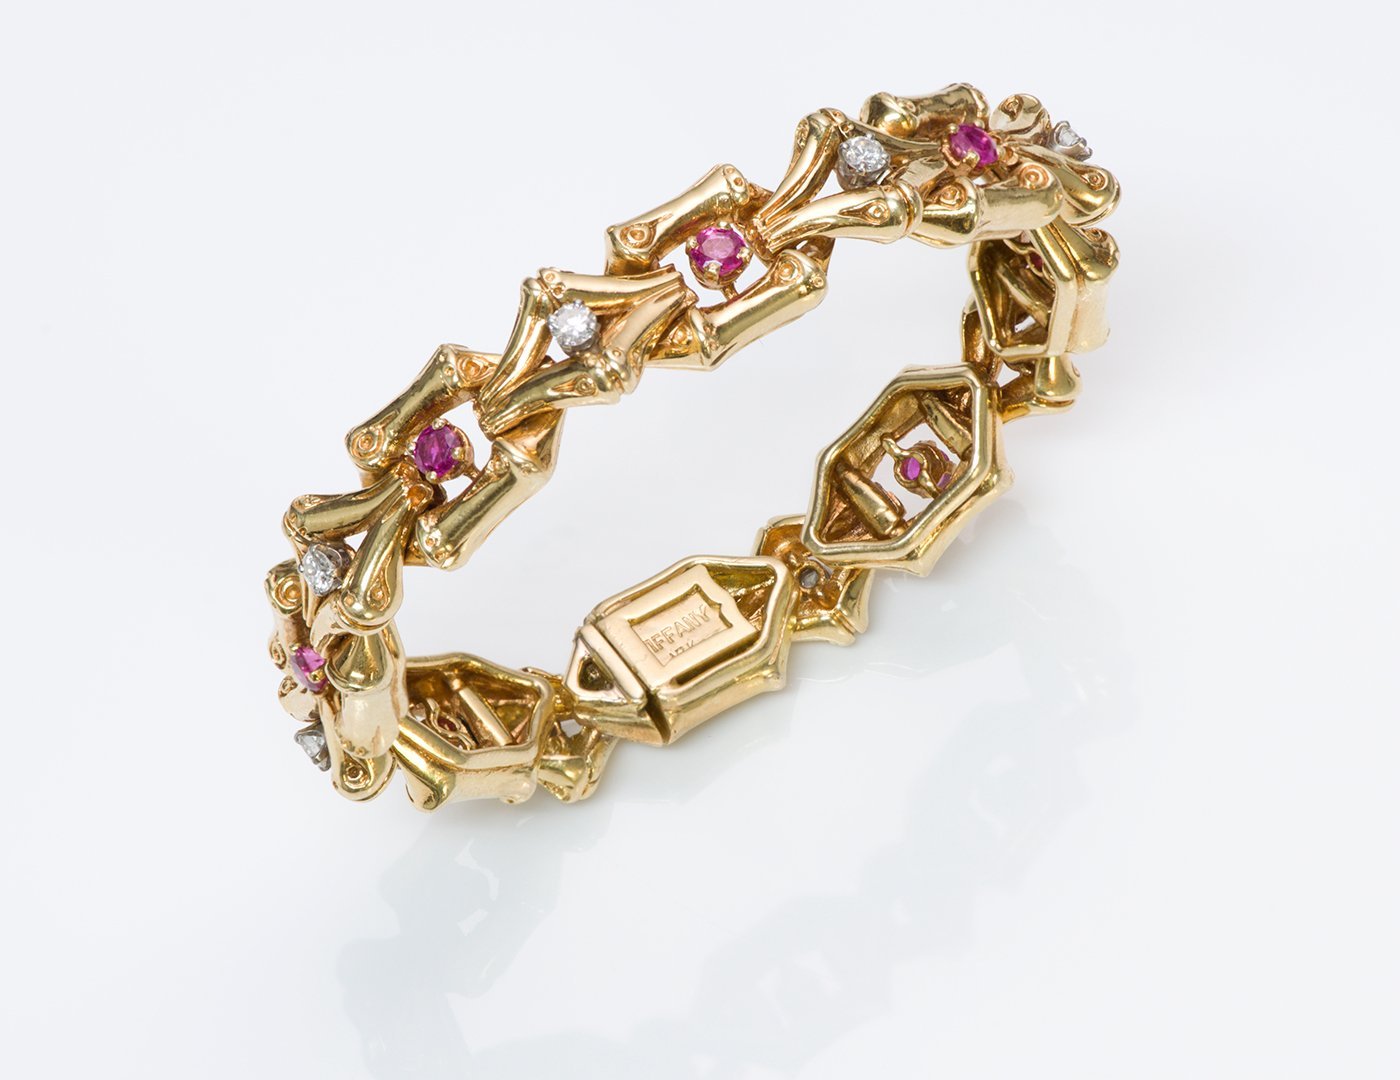 Vintage Tiffany Jewelry: Meet Three Extraordinary Precious Gems - DSF Antique Jewelry